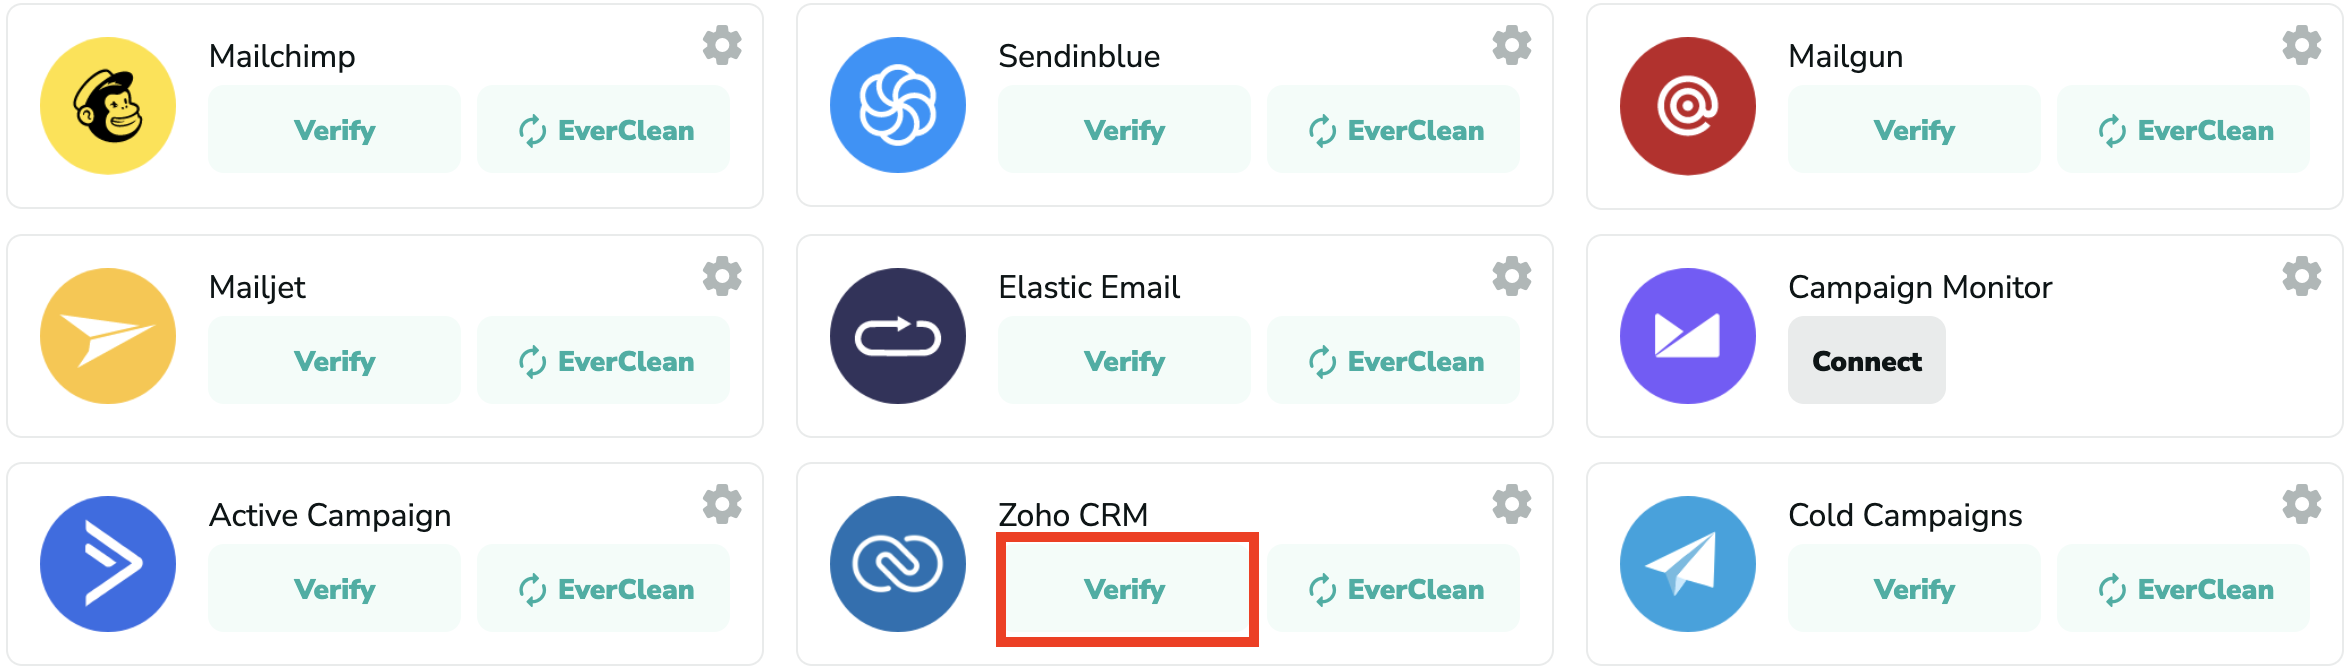 Zoho CRM verification in MillionVerifier list